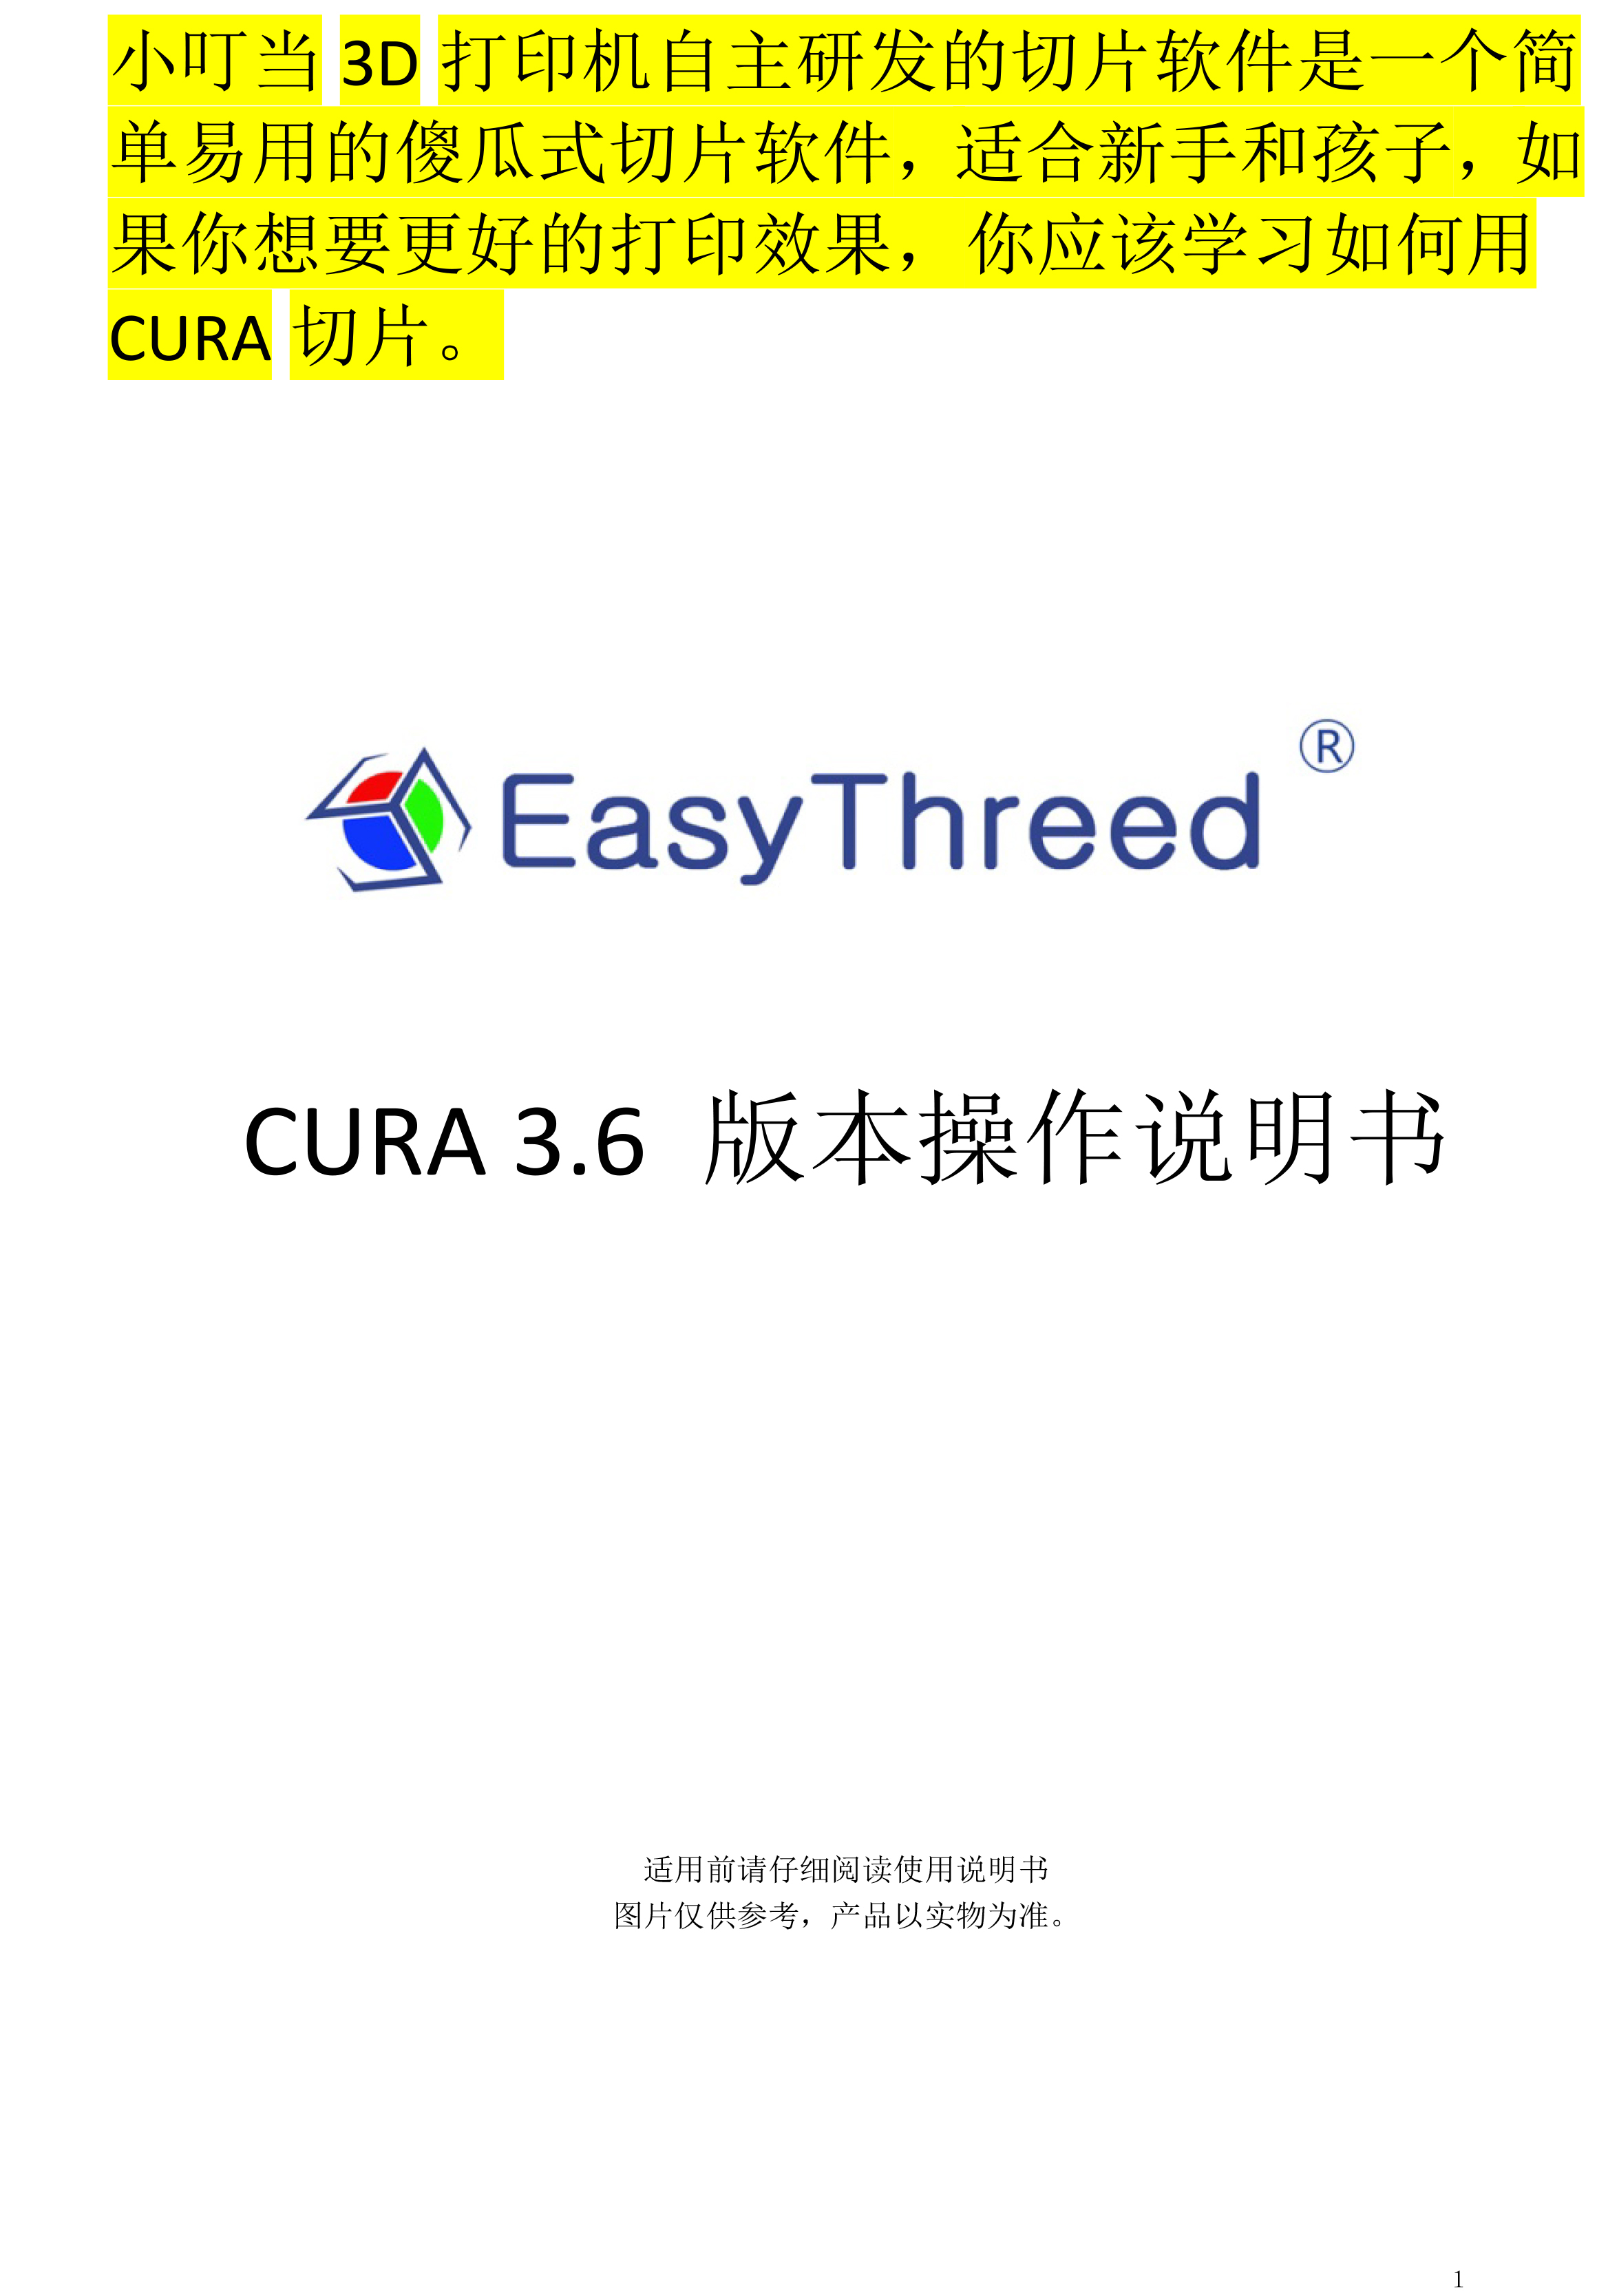 CURA 3.6版本 使用说明书